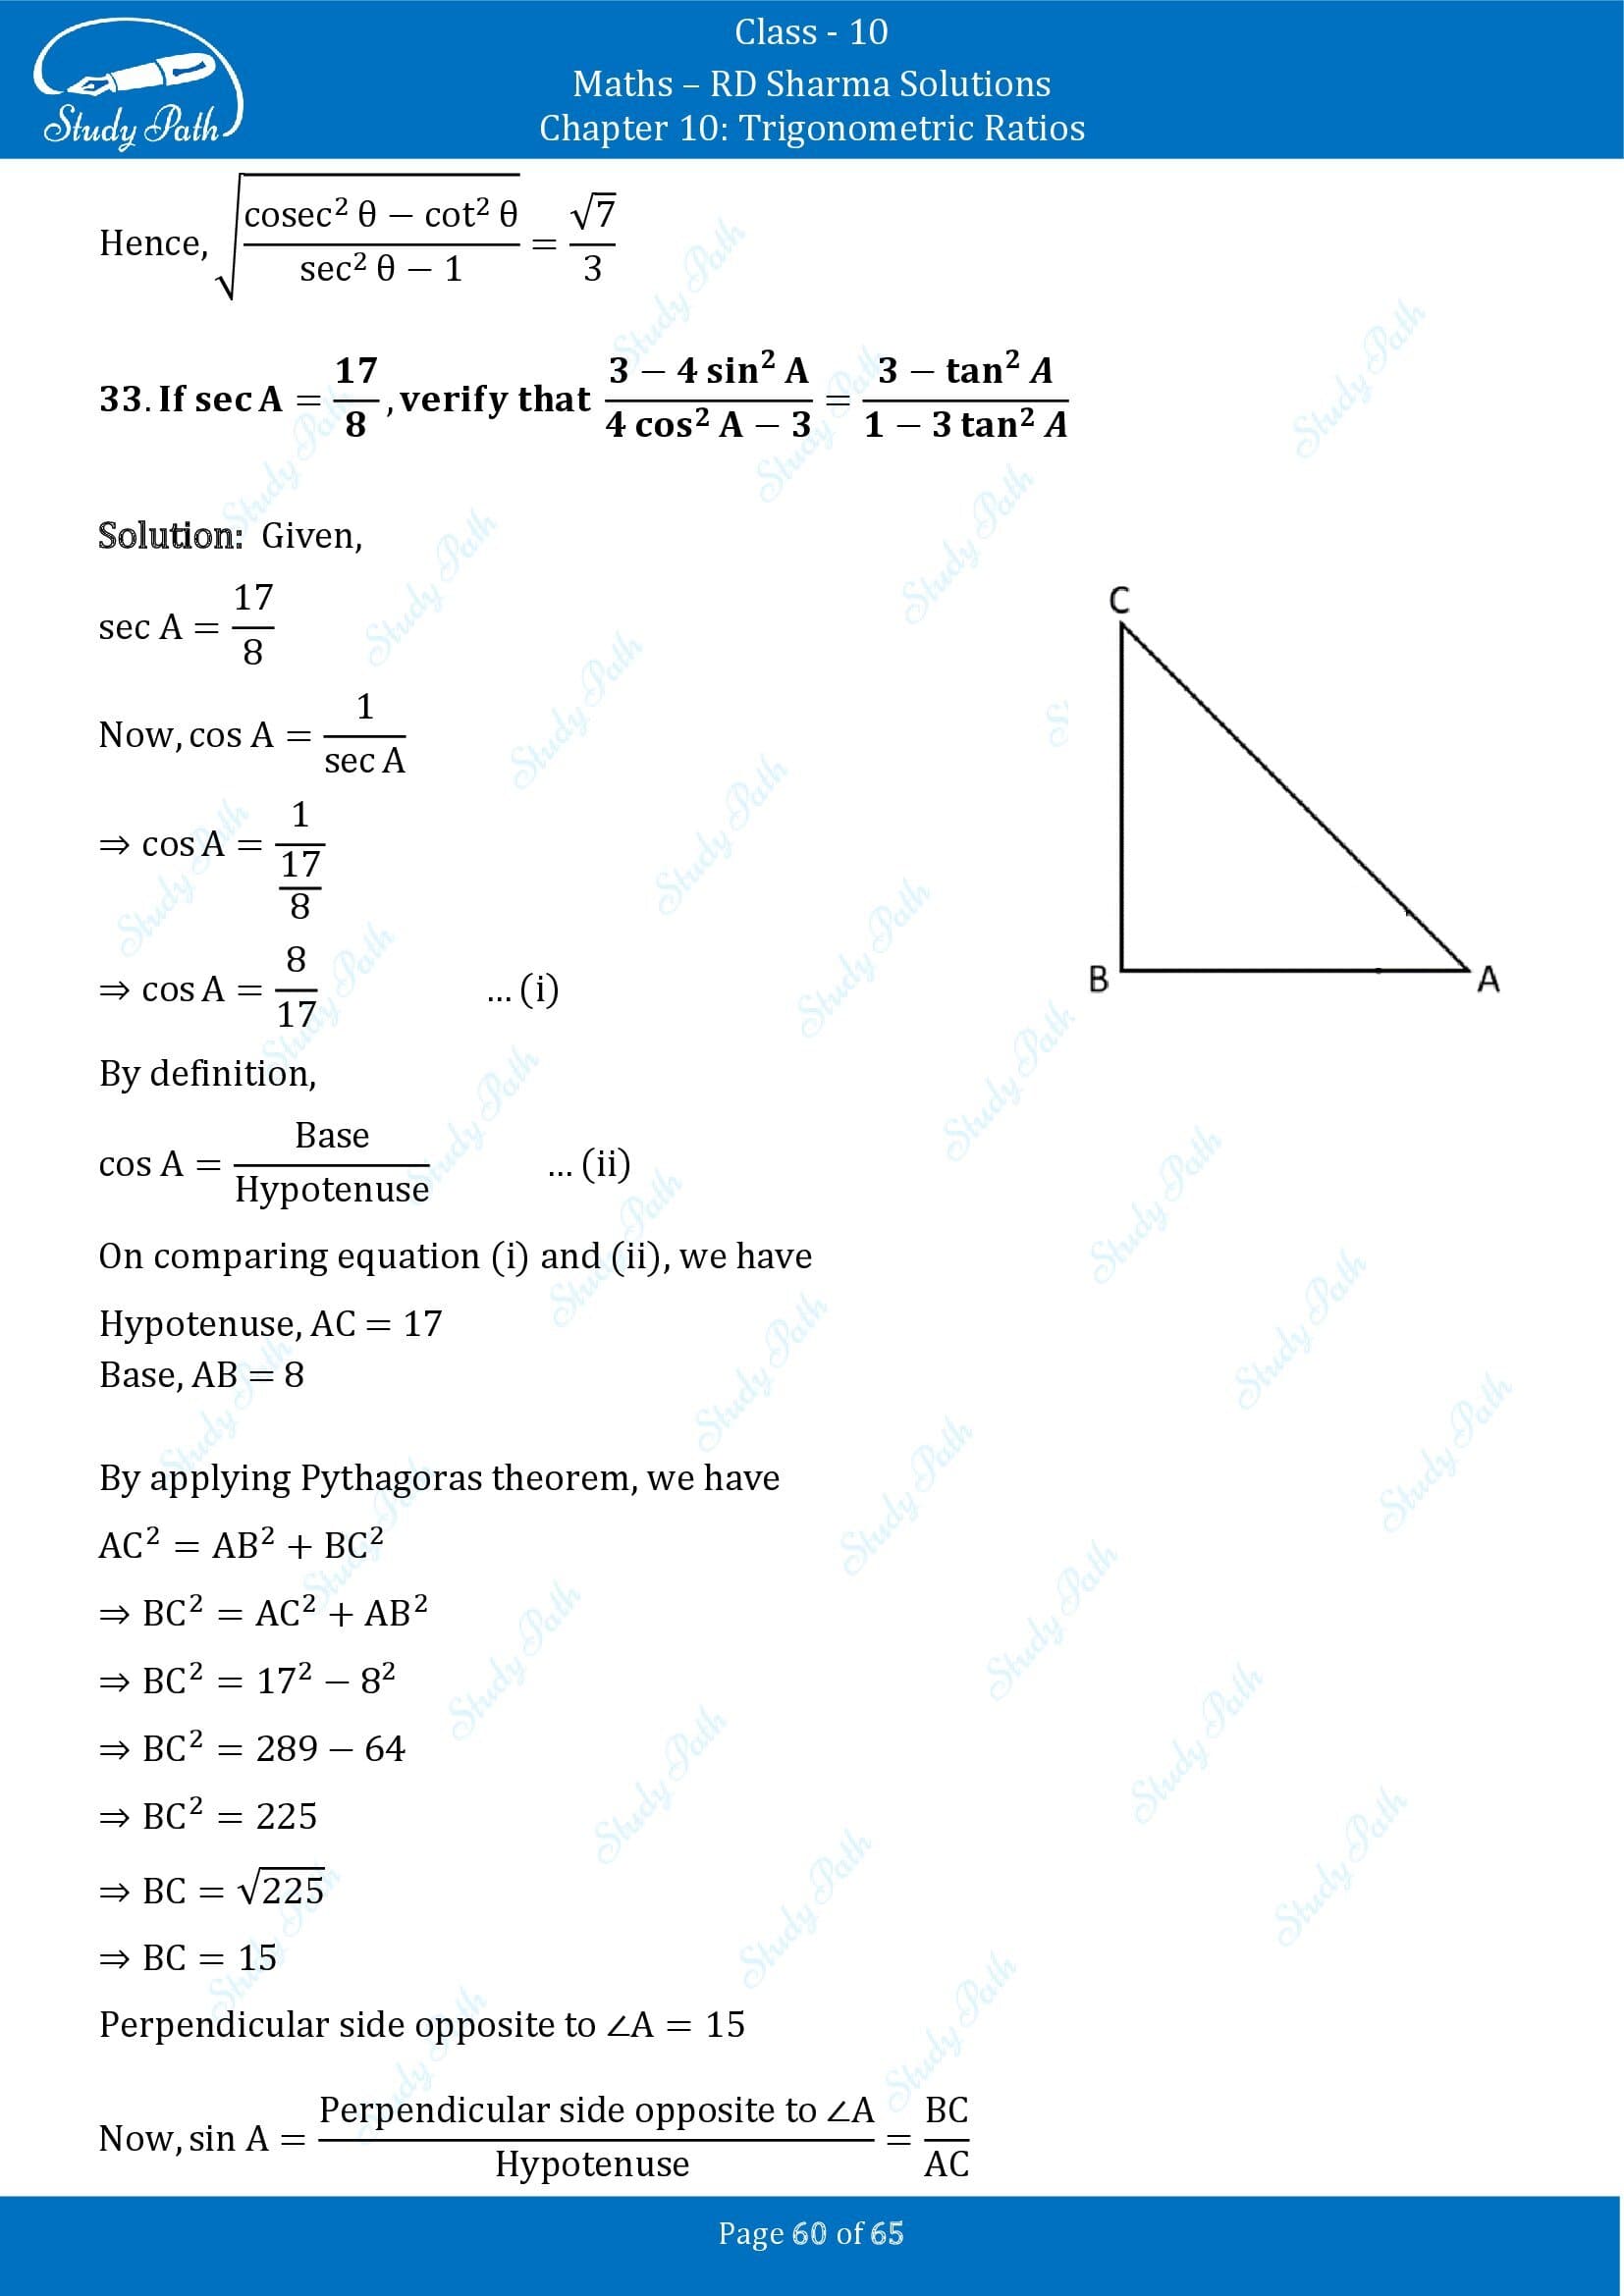 RD Sharma Solutions Class 10 Chapter 10 Trigonometric Ratios Exercise 10.1 00060